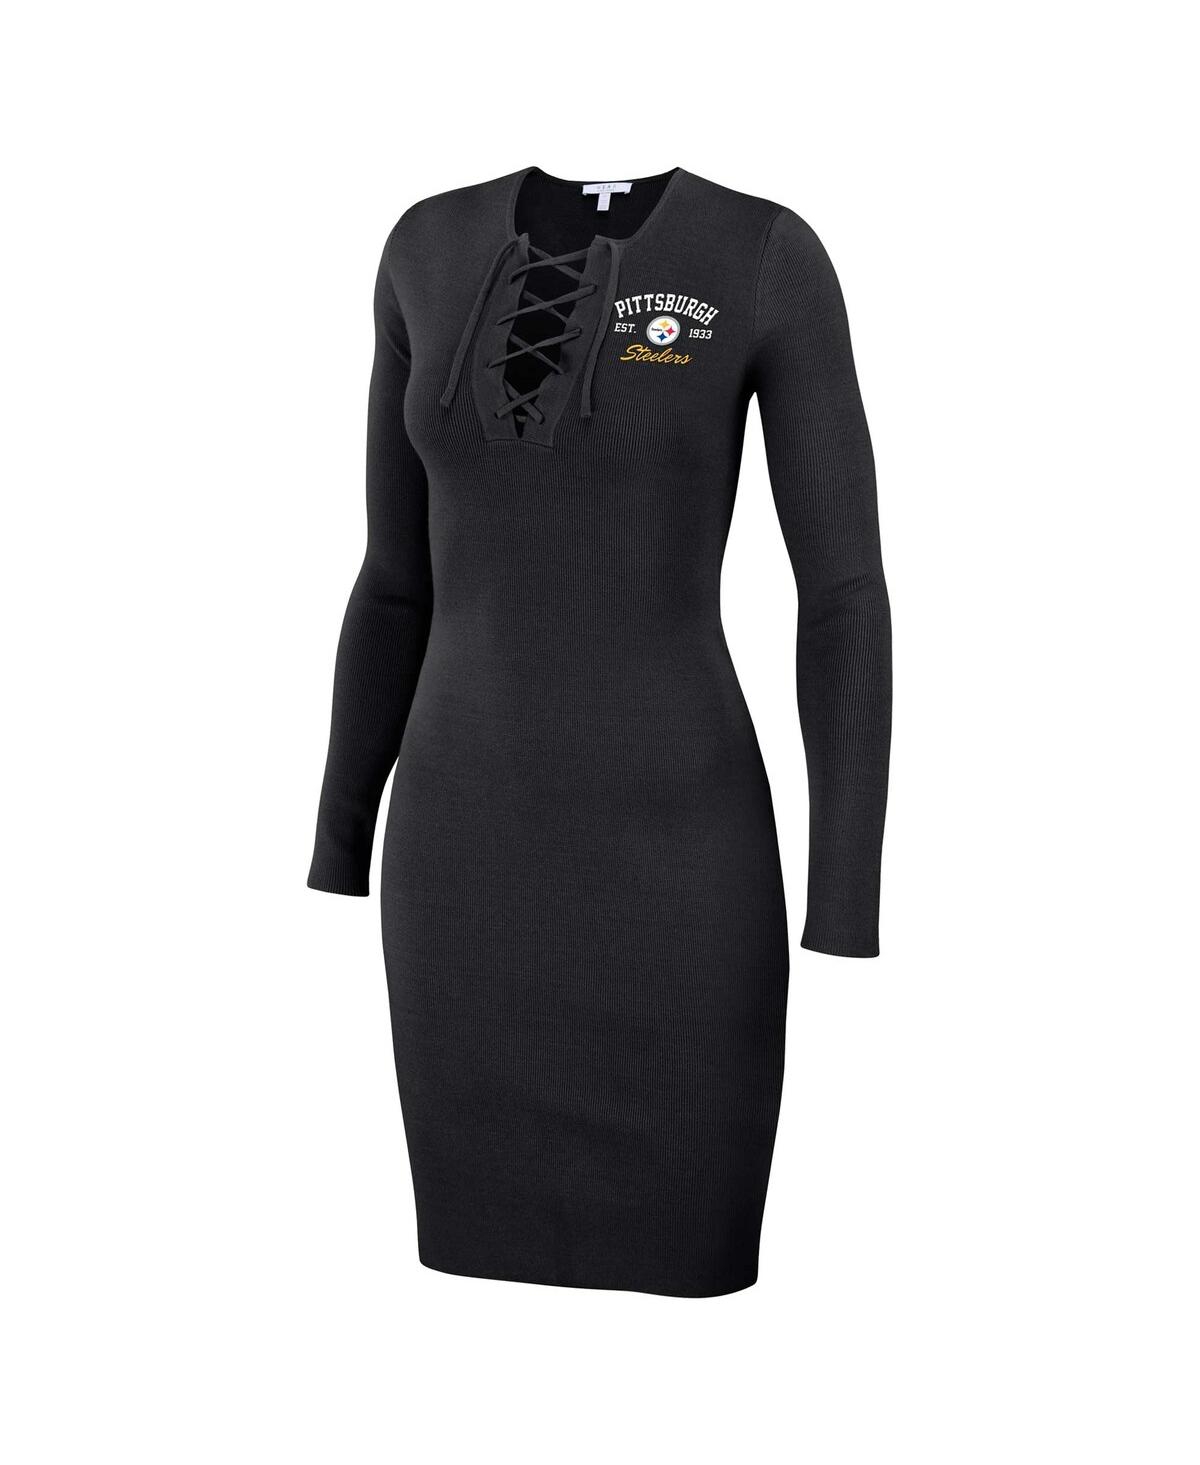 Shop Wear By Erin Andrews Women's  Black Pittsburgh Steelers Lace Up Long Sleeve Dress